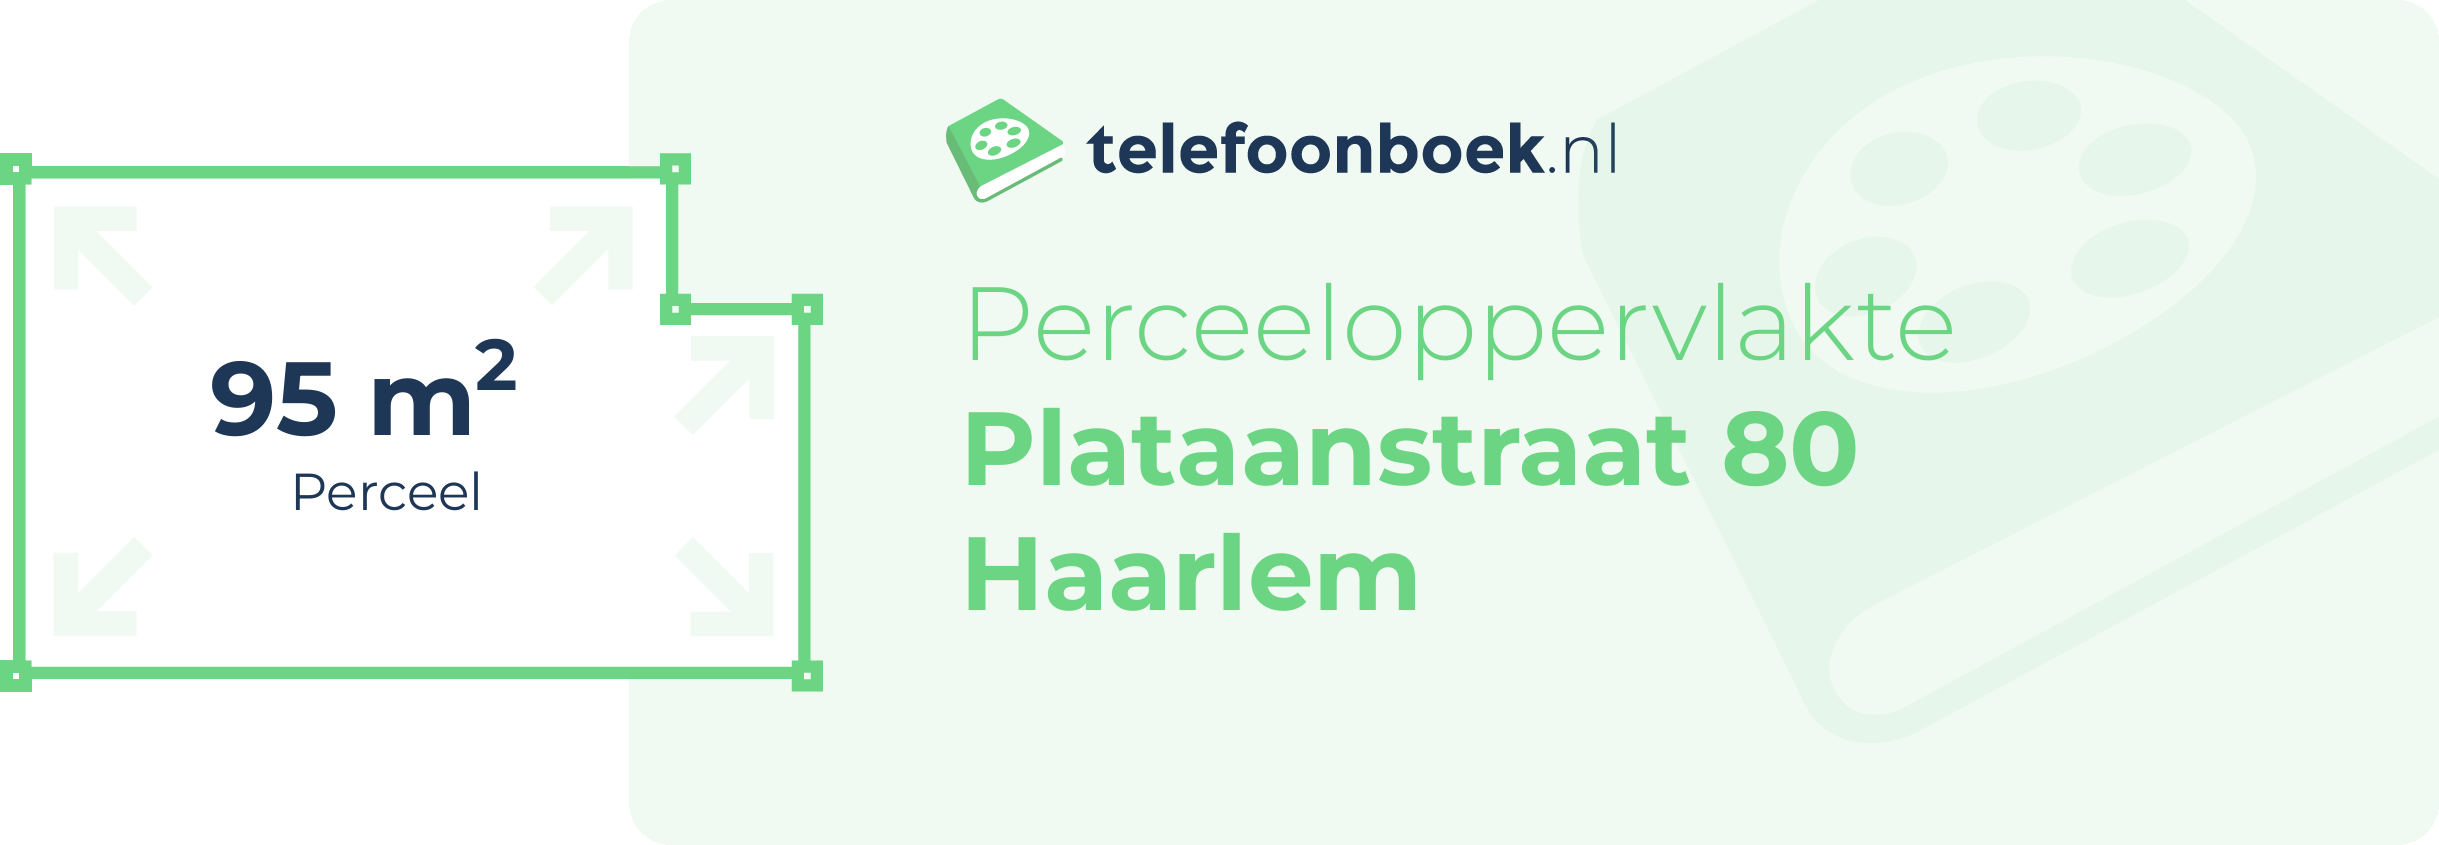 Perceeloppervlakte Plataanstraat 80 Haarlem